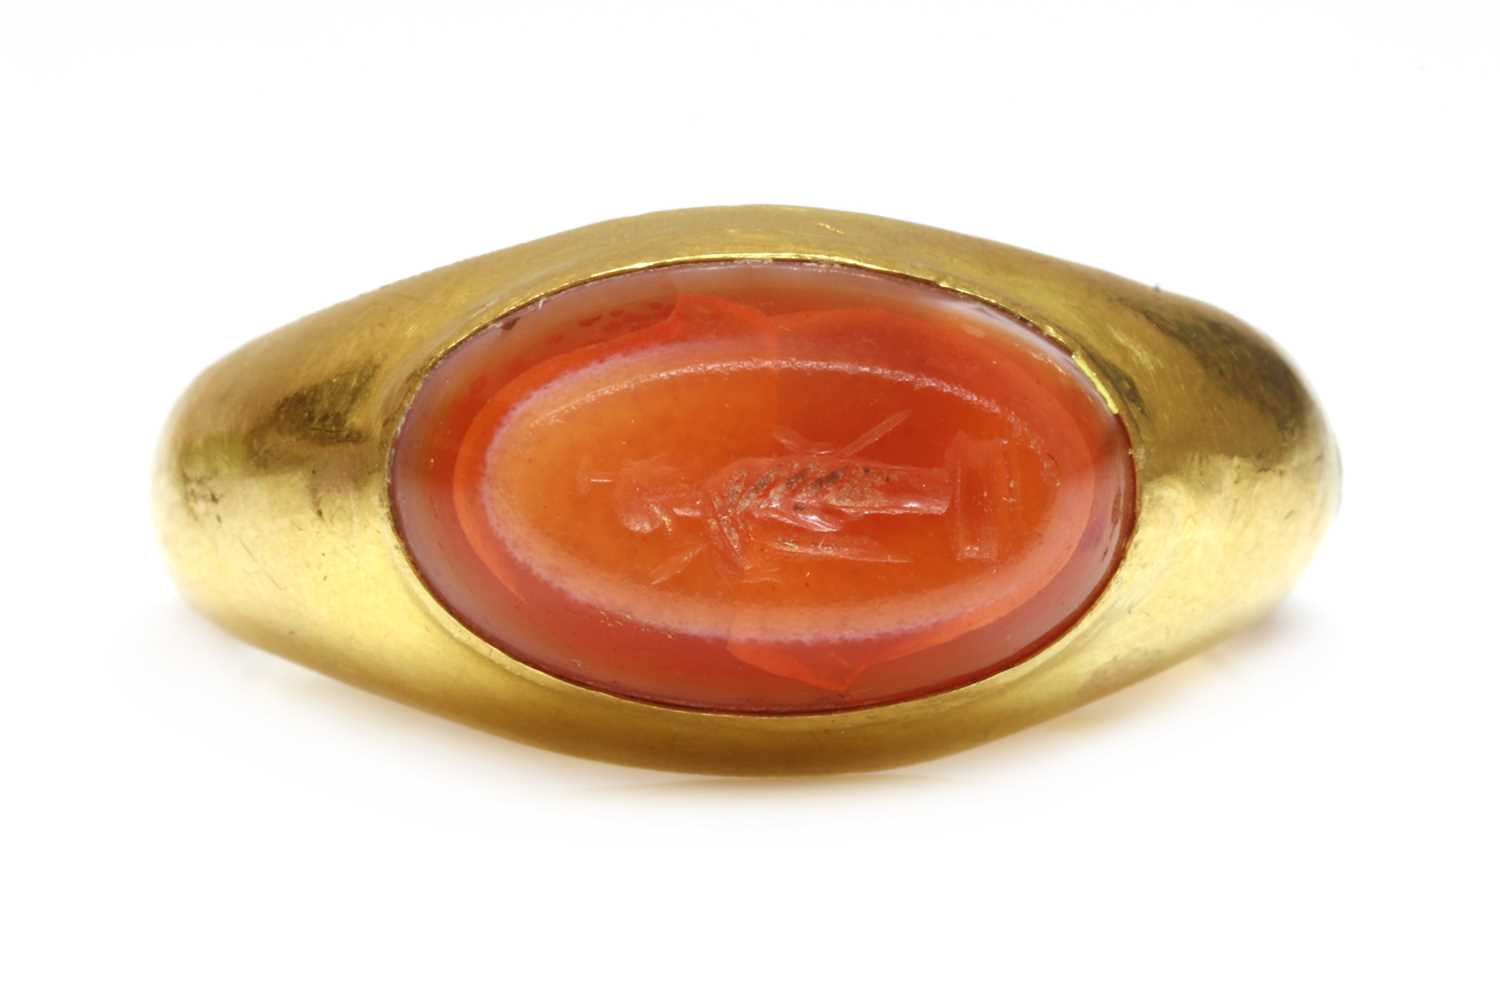 Lot 2 - A Roman hollow gold hardstone intaglio ring